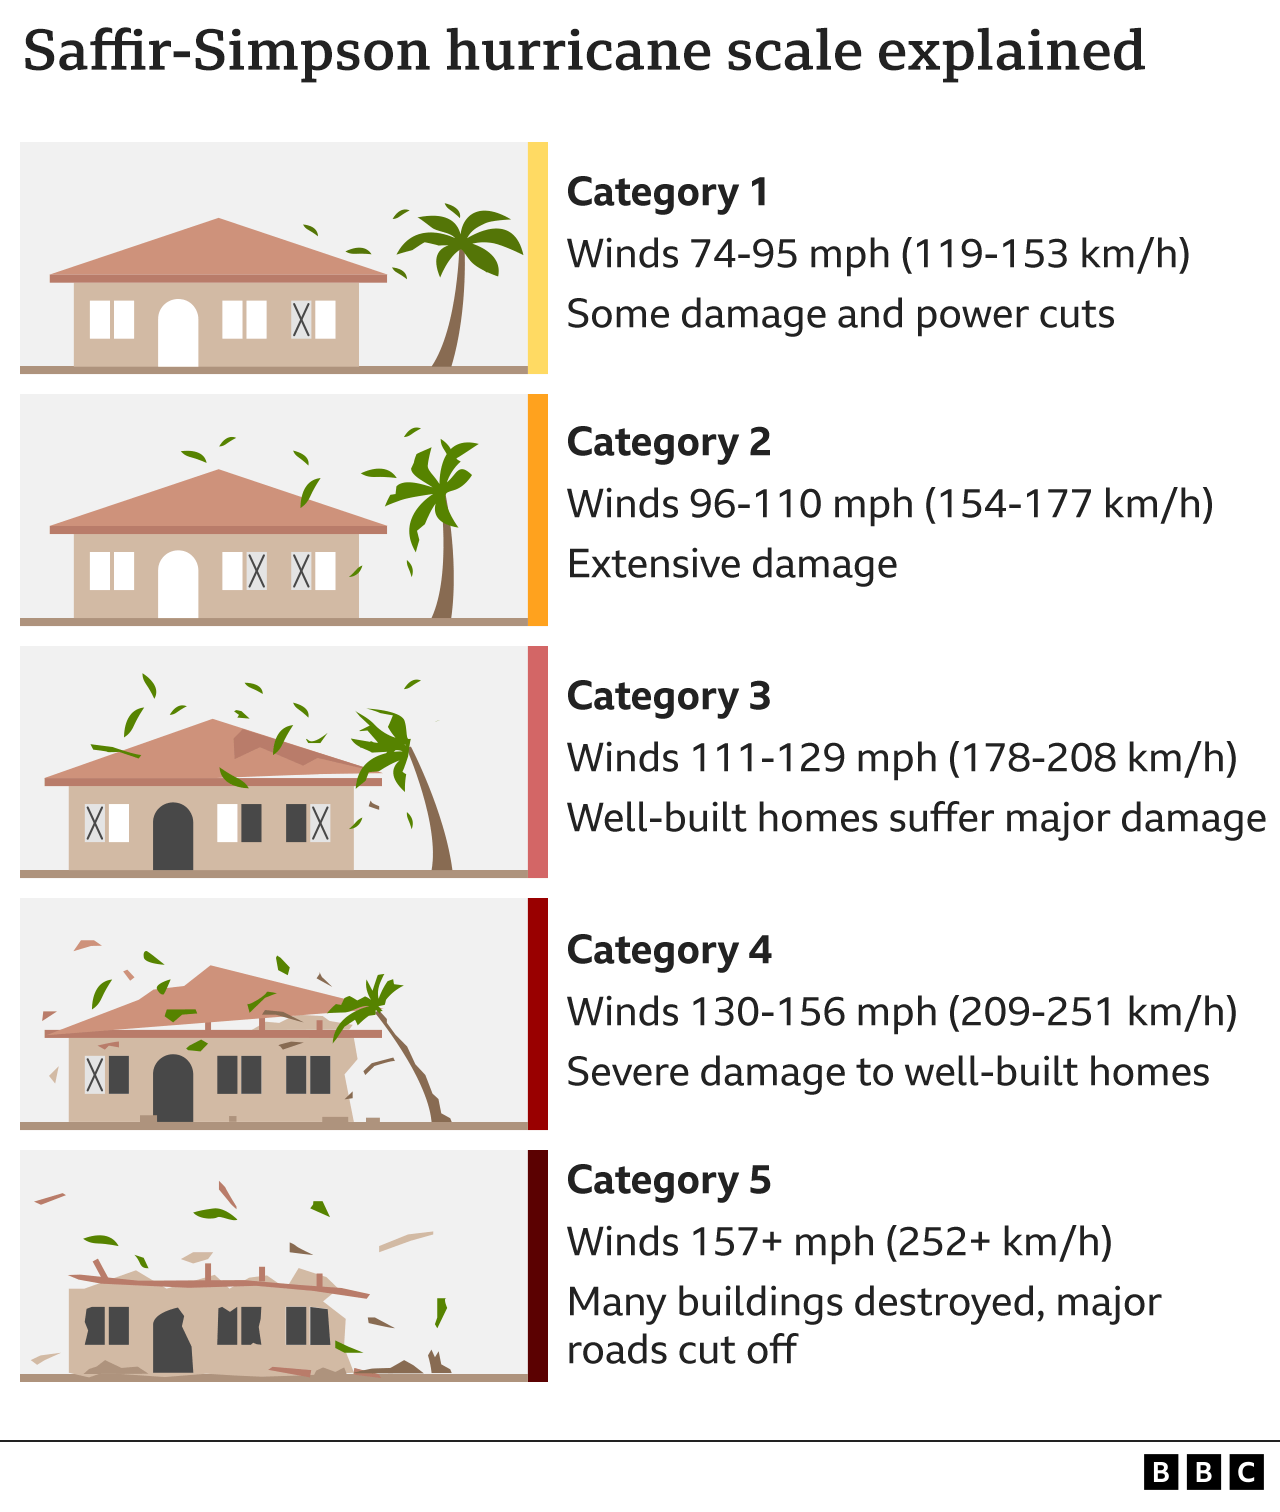 Graphic explaining the Saffir-Simpson scale of hurricane categories